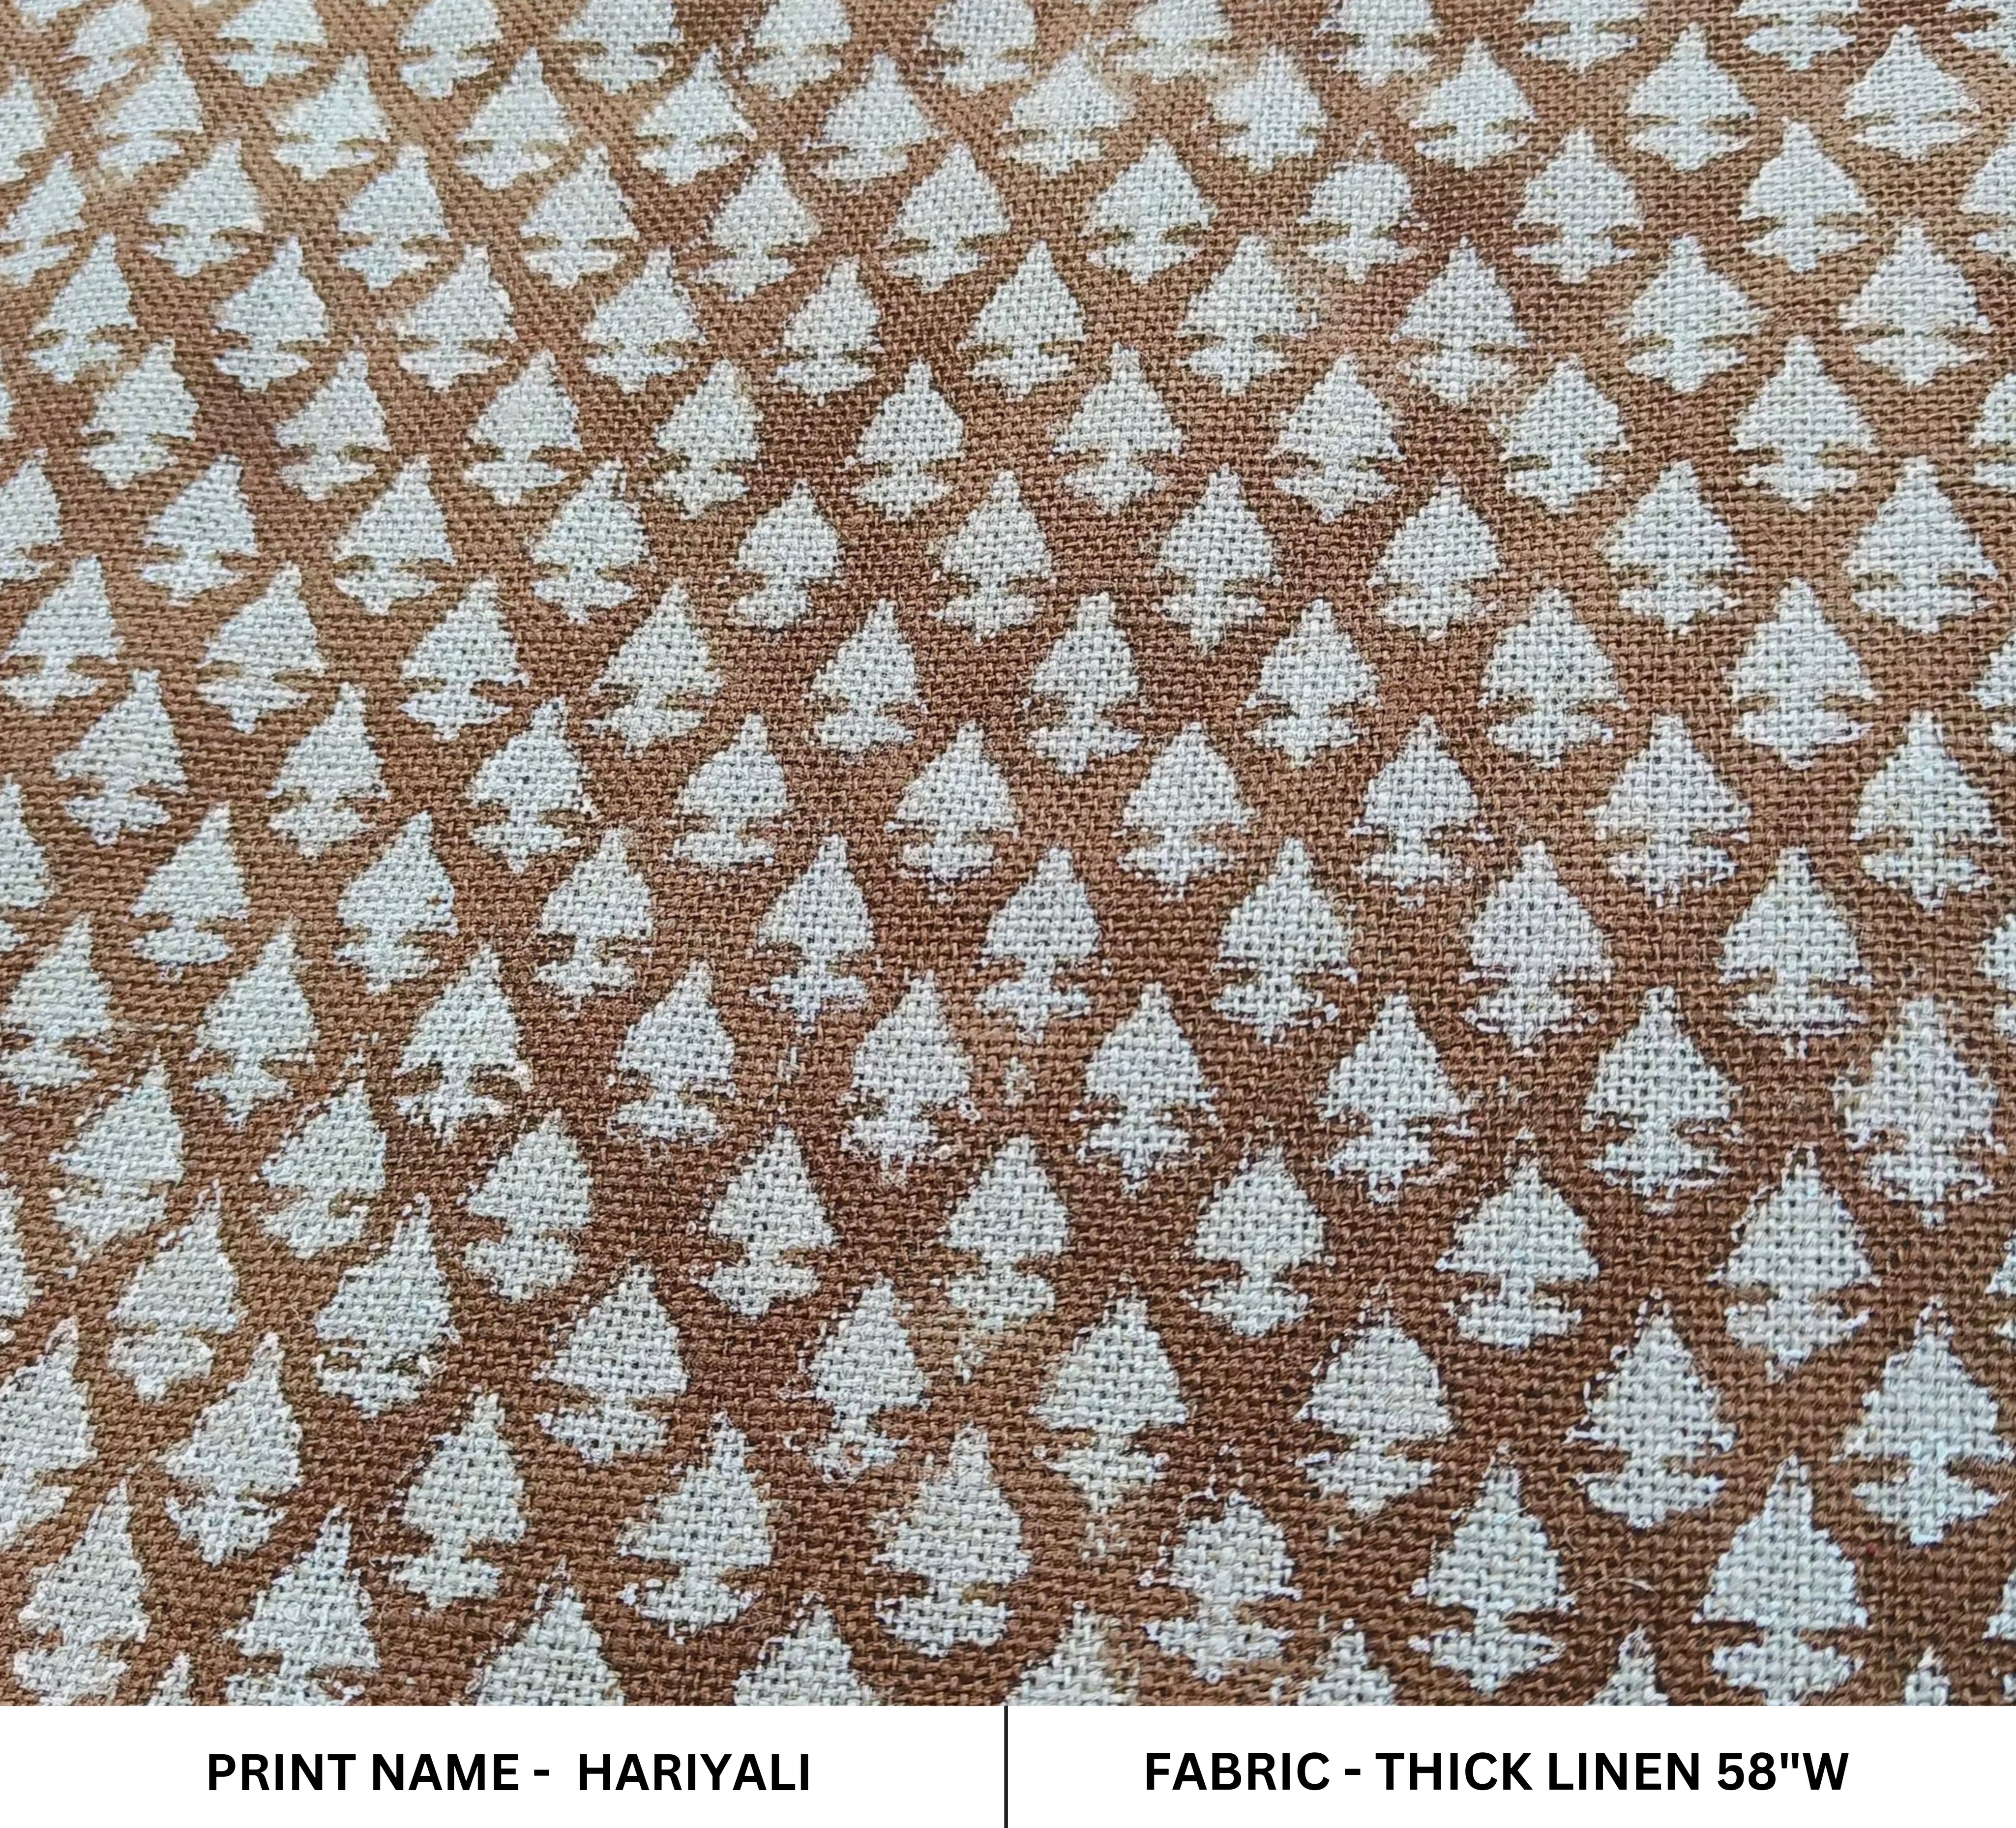 Hariyali Brown Block Print Floral Linen Fabric, Cushion Pillow Fabric By The Yard, Modern Home Decor, Upholstery Fabric